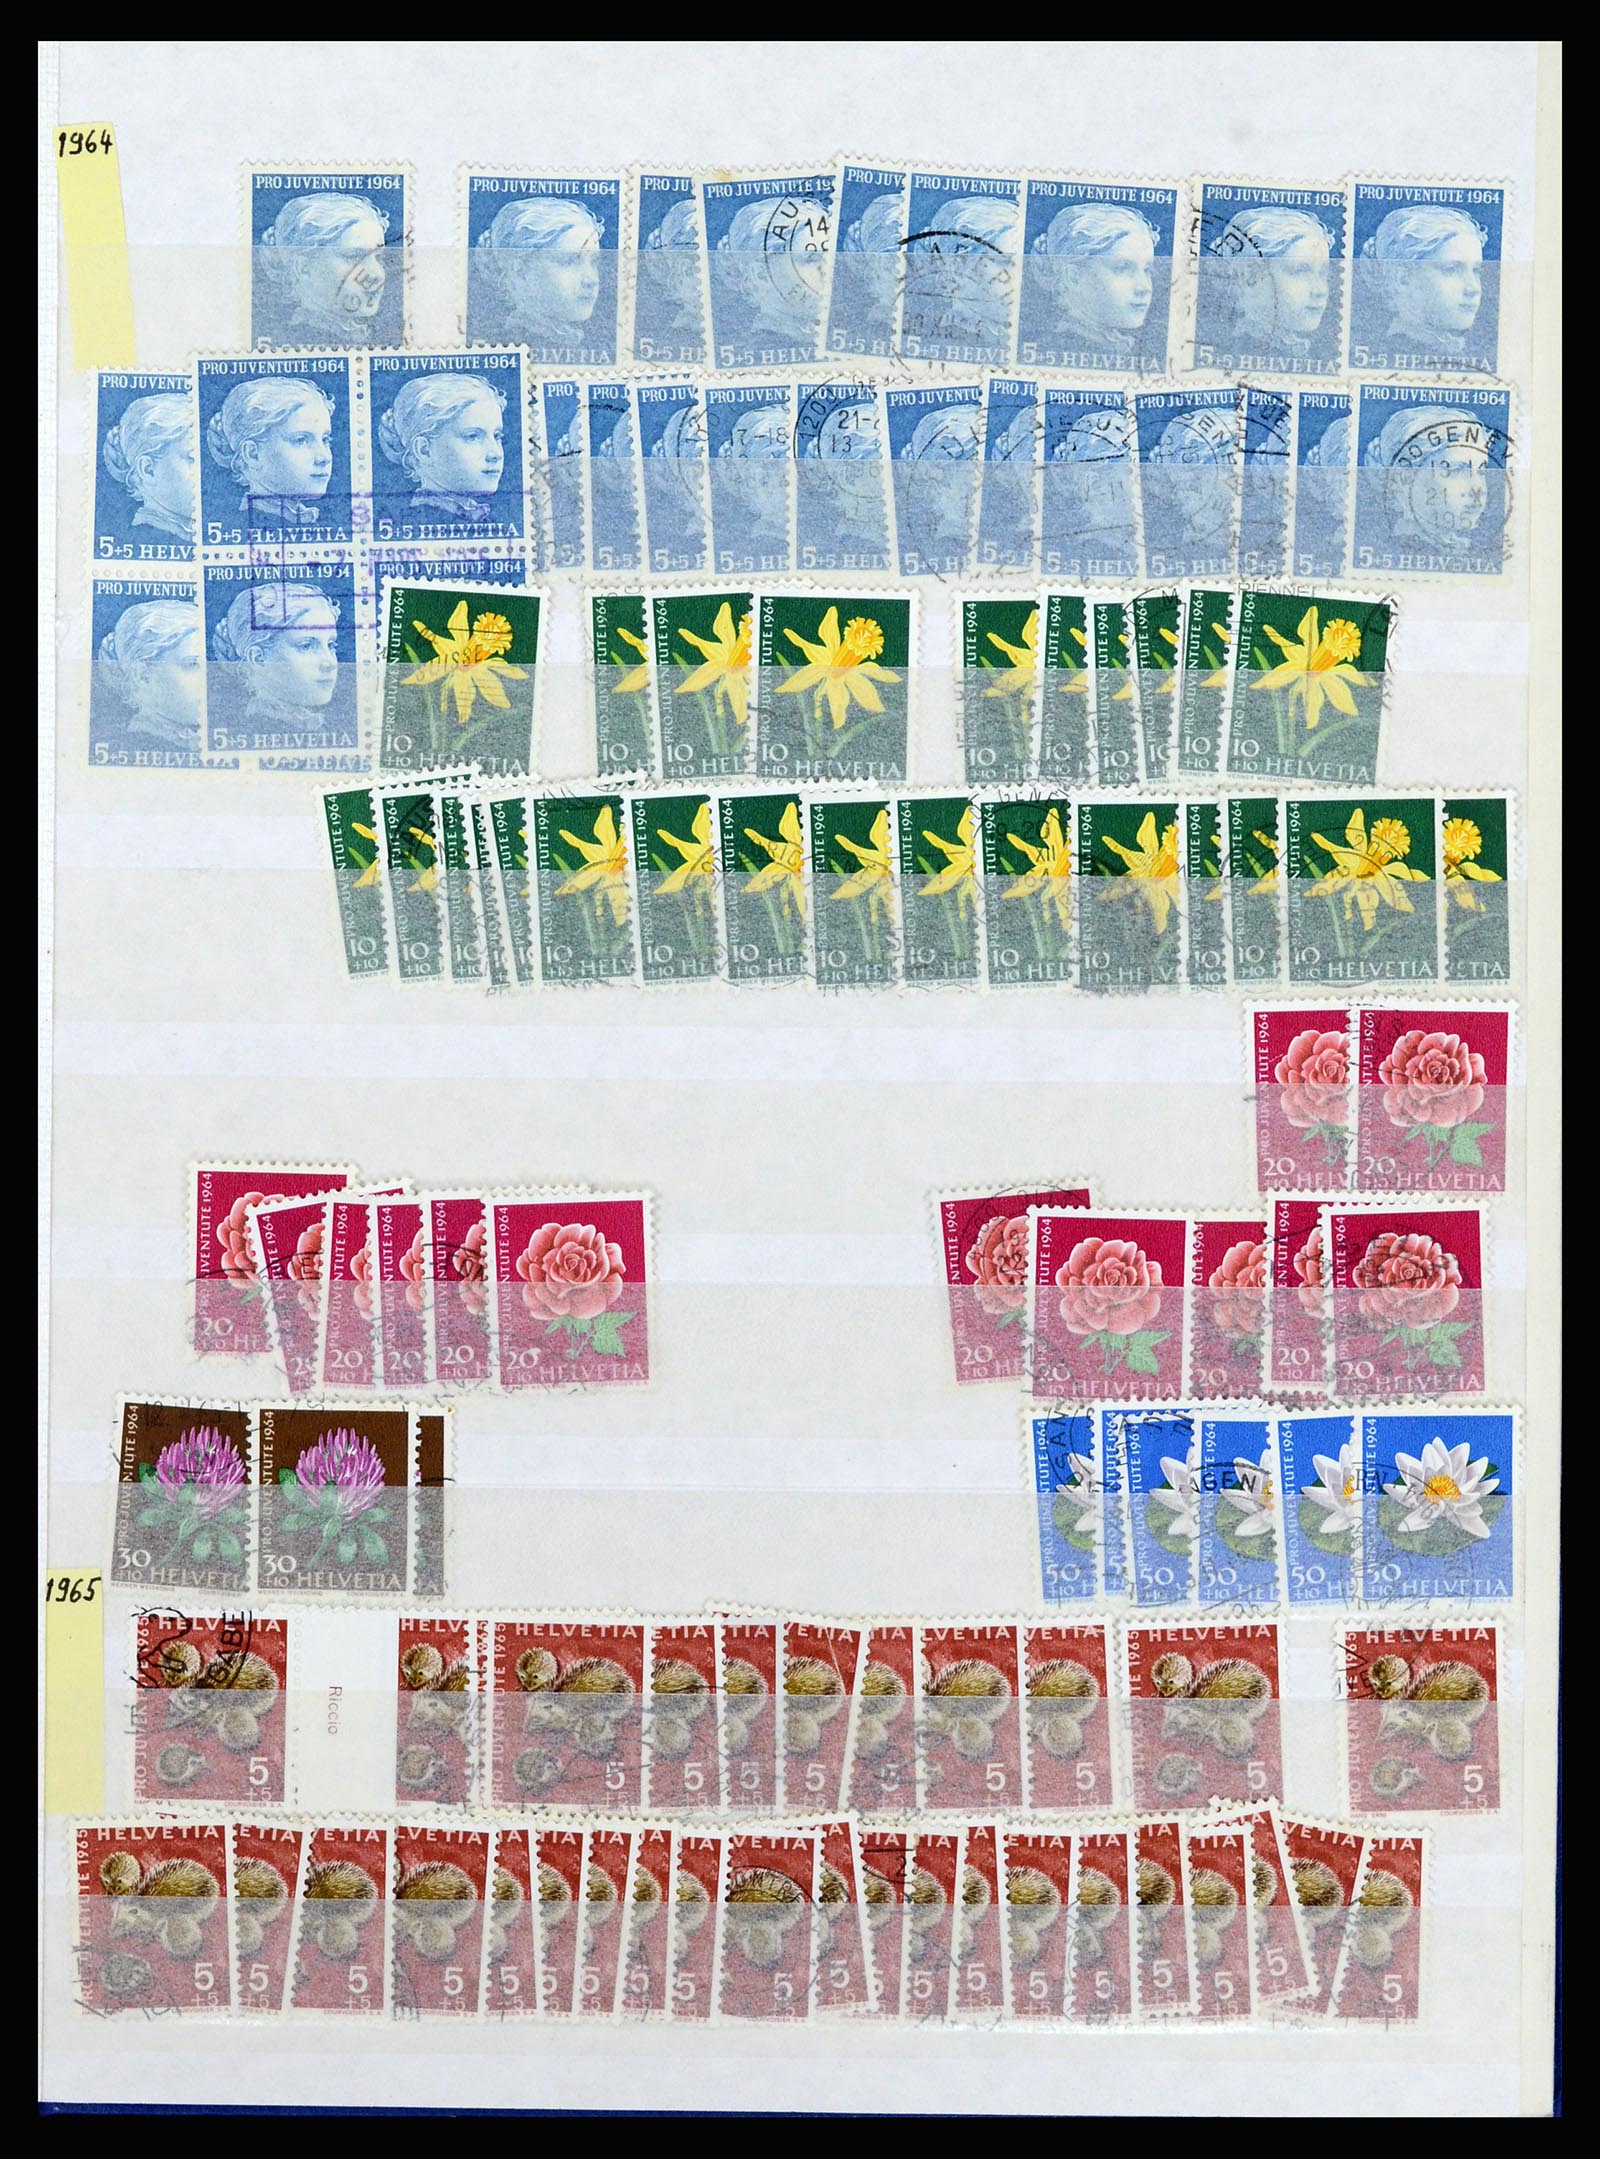 37061 017 - Stamp collection 37061 Switzerland 1913-2000.